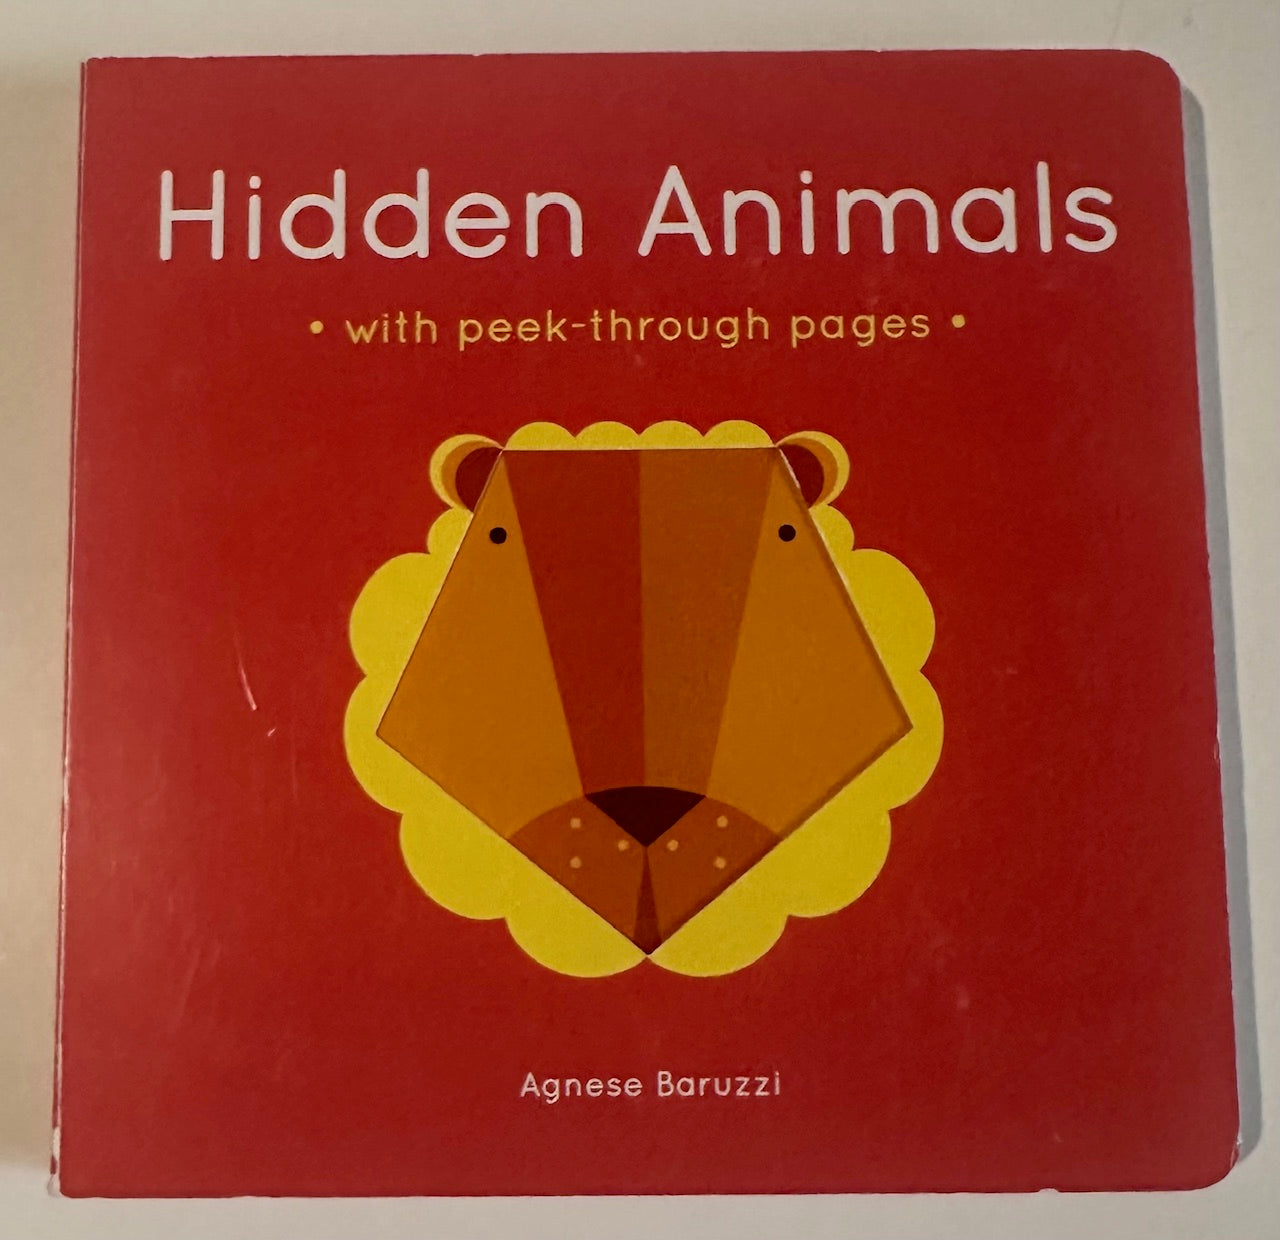 "Hidden Animals"